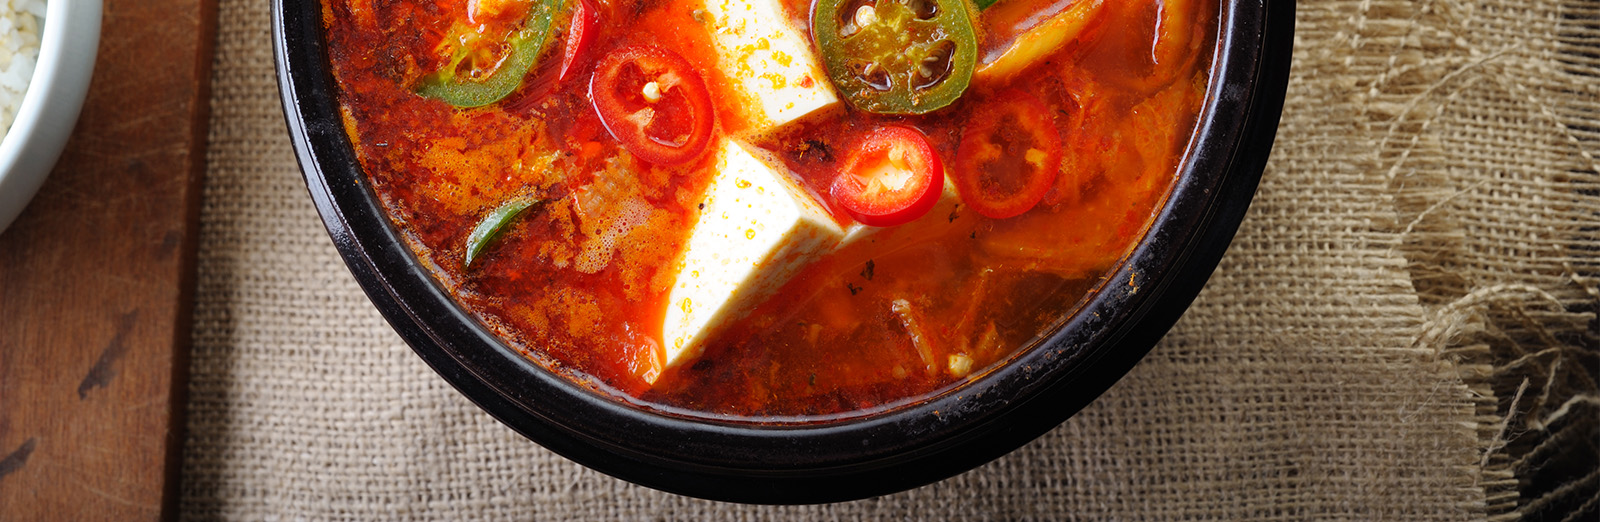 kimchi soup - hero image.jpg